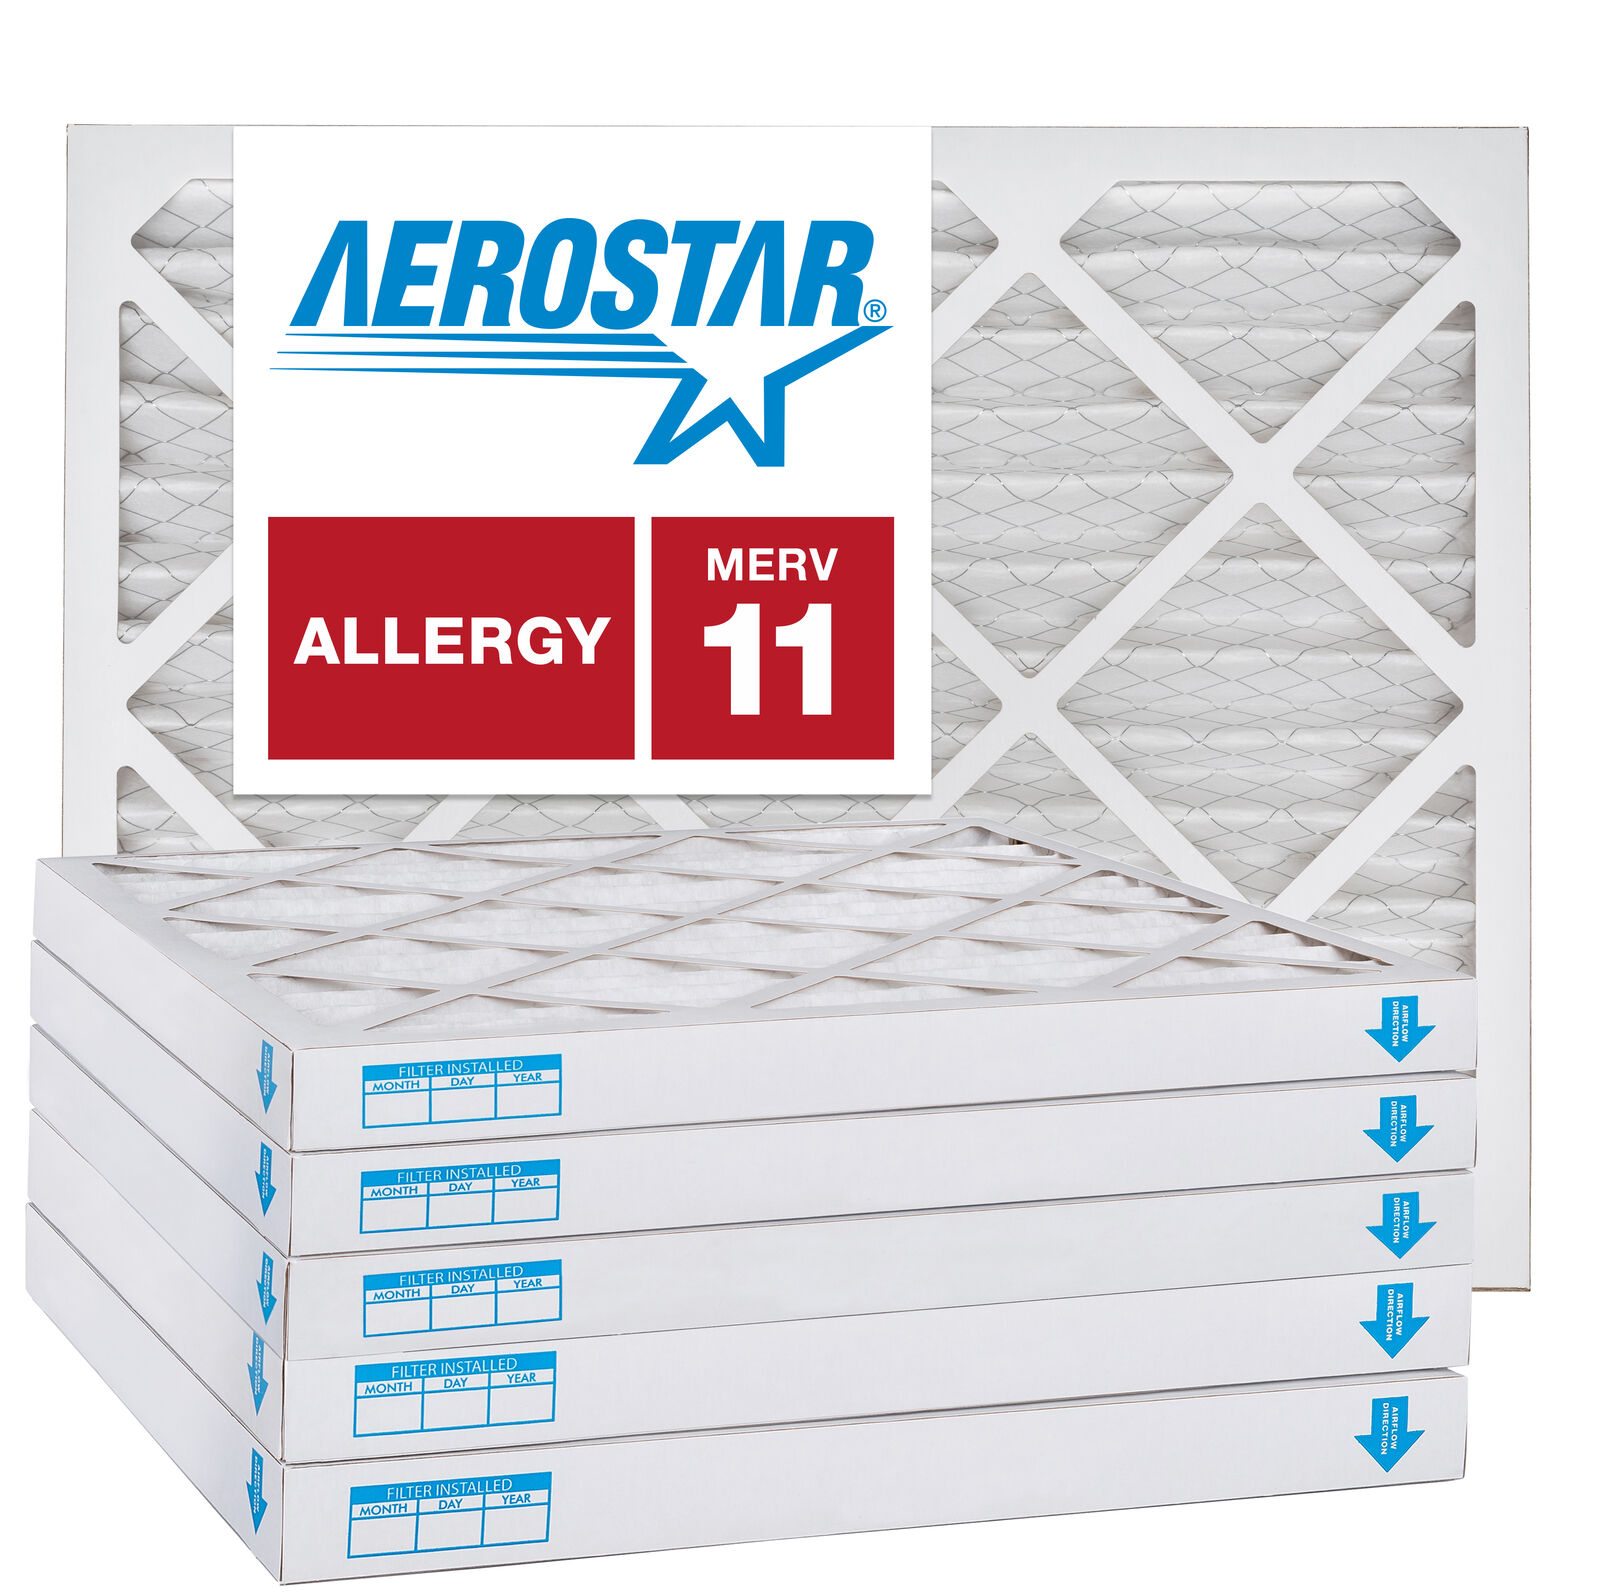 16x20x2 AC and Furnace Air Filter by Aerostar - MERV 11, Box of 12